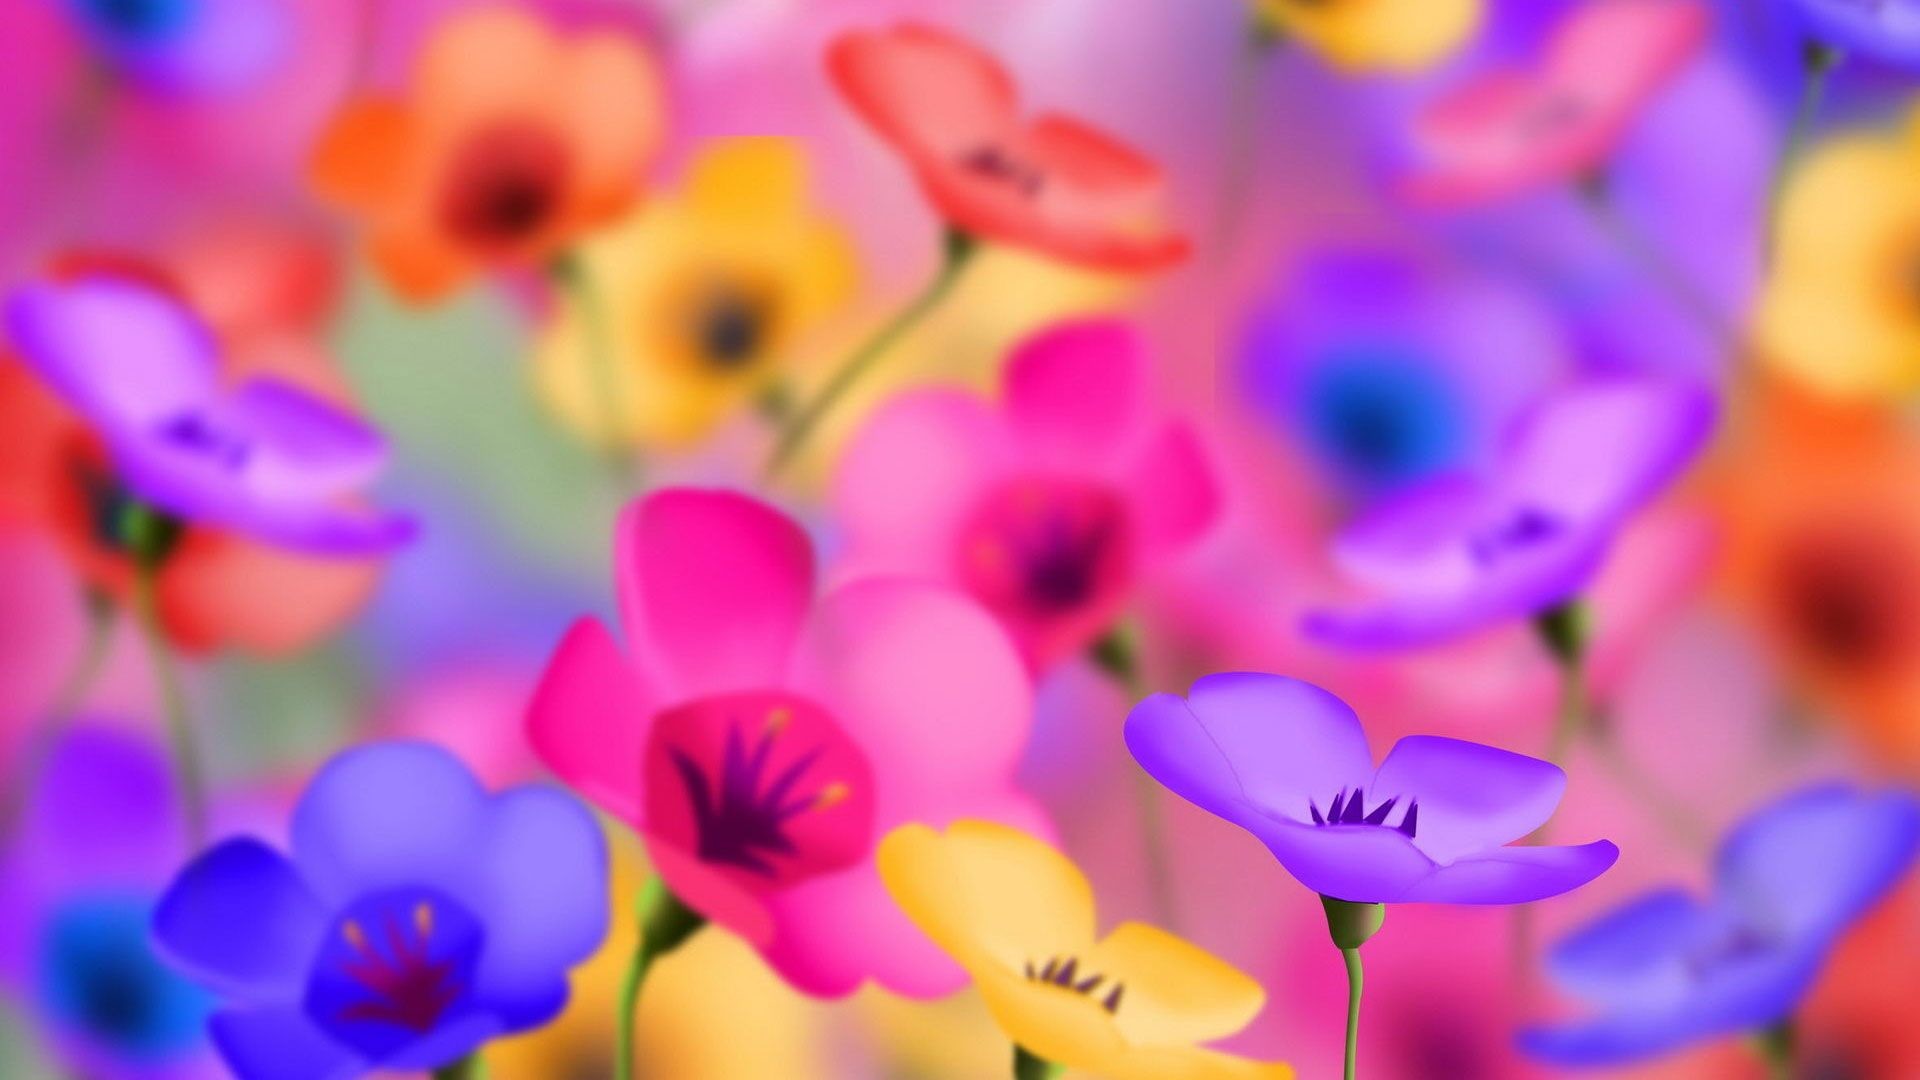 1920x1080 hd pics photos flowers colorful bright desktop background wallpaper